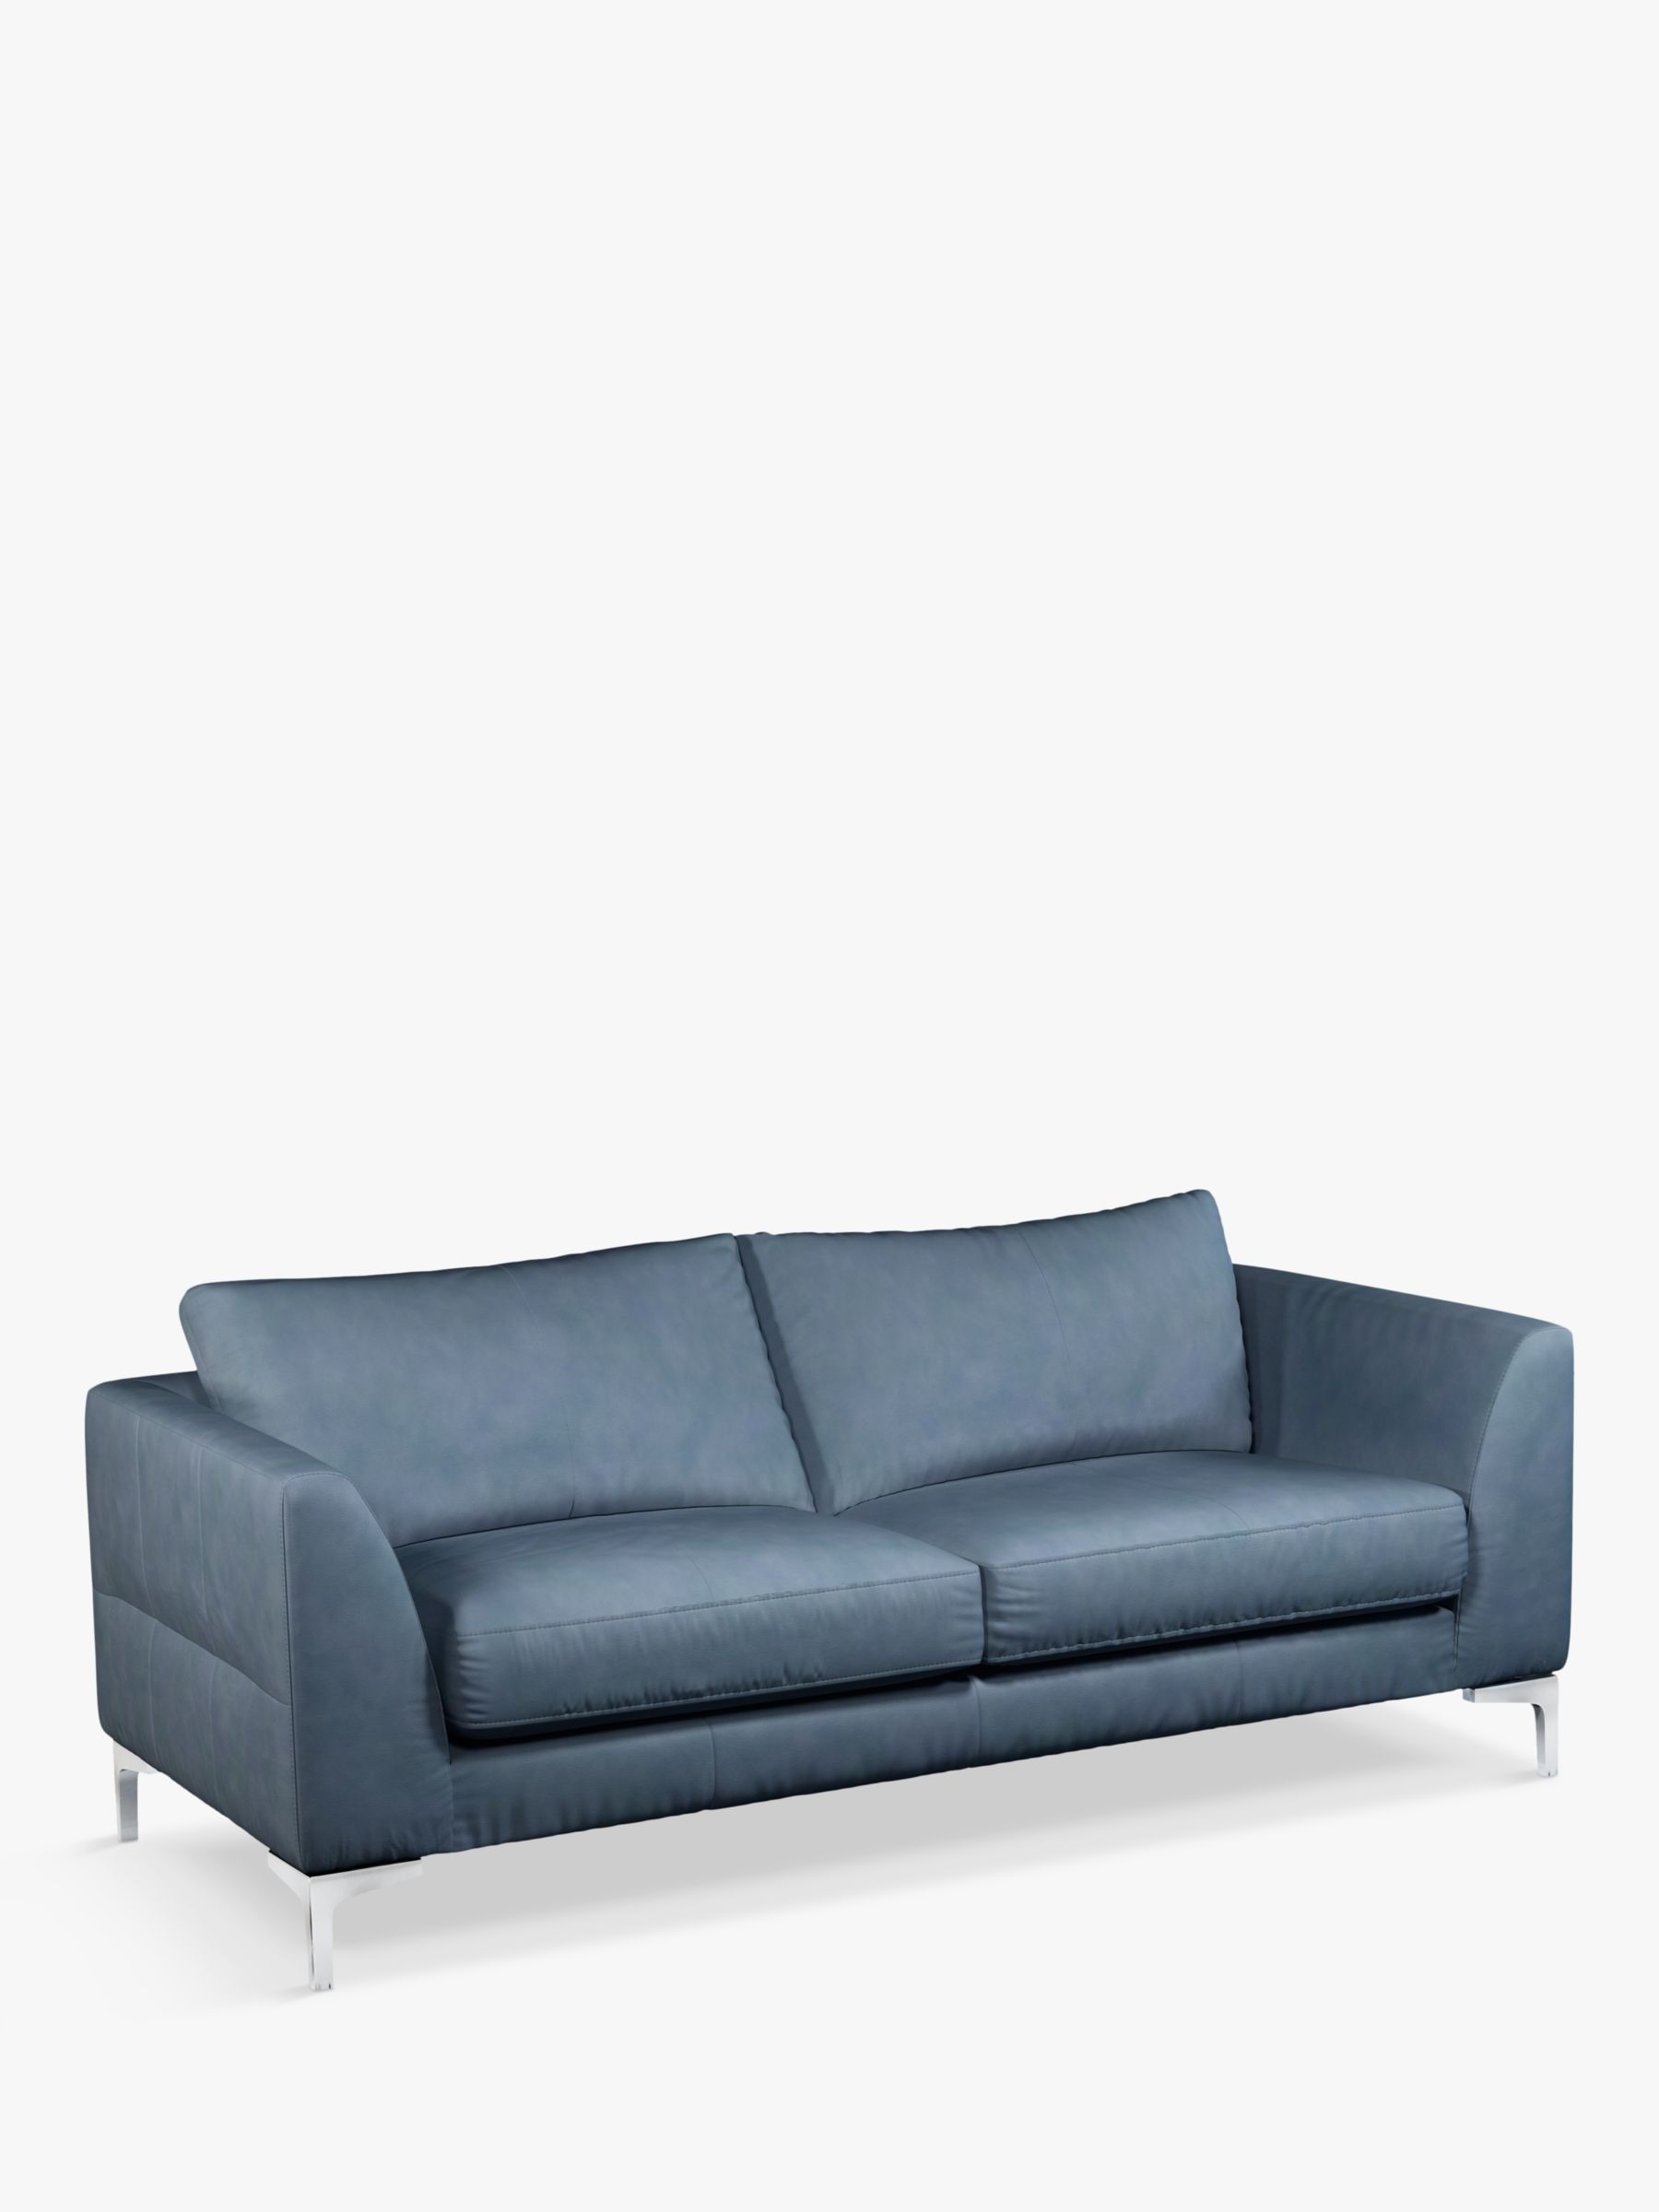 Belgrave Range, John Lewis Belgrave Large 3 Seater Leather Sofa, Metal Leg, Soft Touch Blue